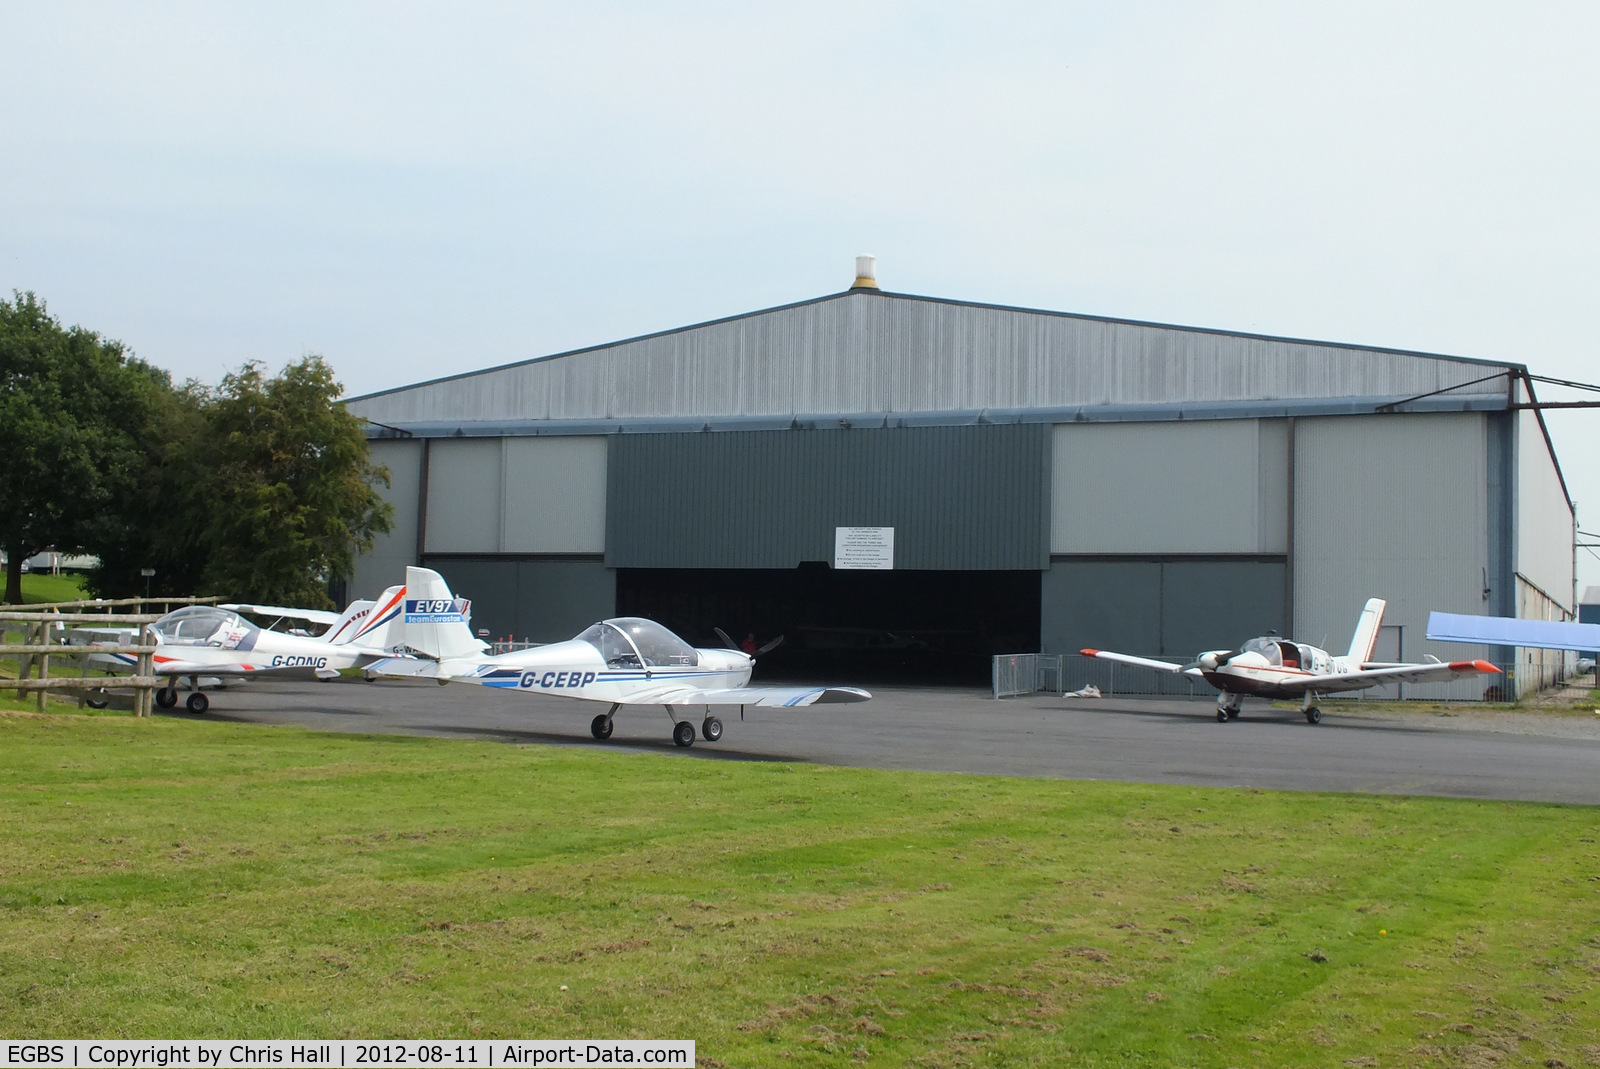 Shobdon Aerodrome Airport, Leominster, England United Kingdom (EGBS) - the main hangar at Shobdon Airfield, Herefordshire